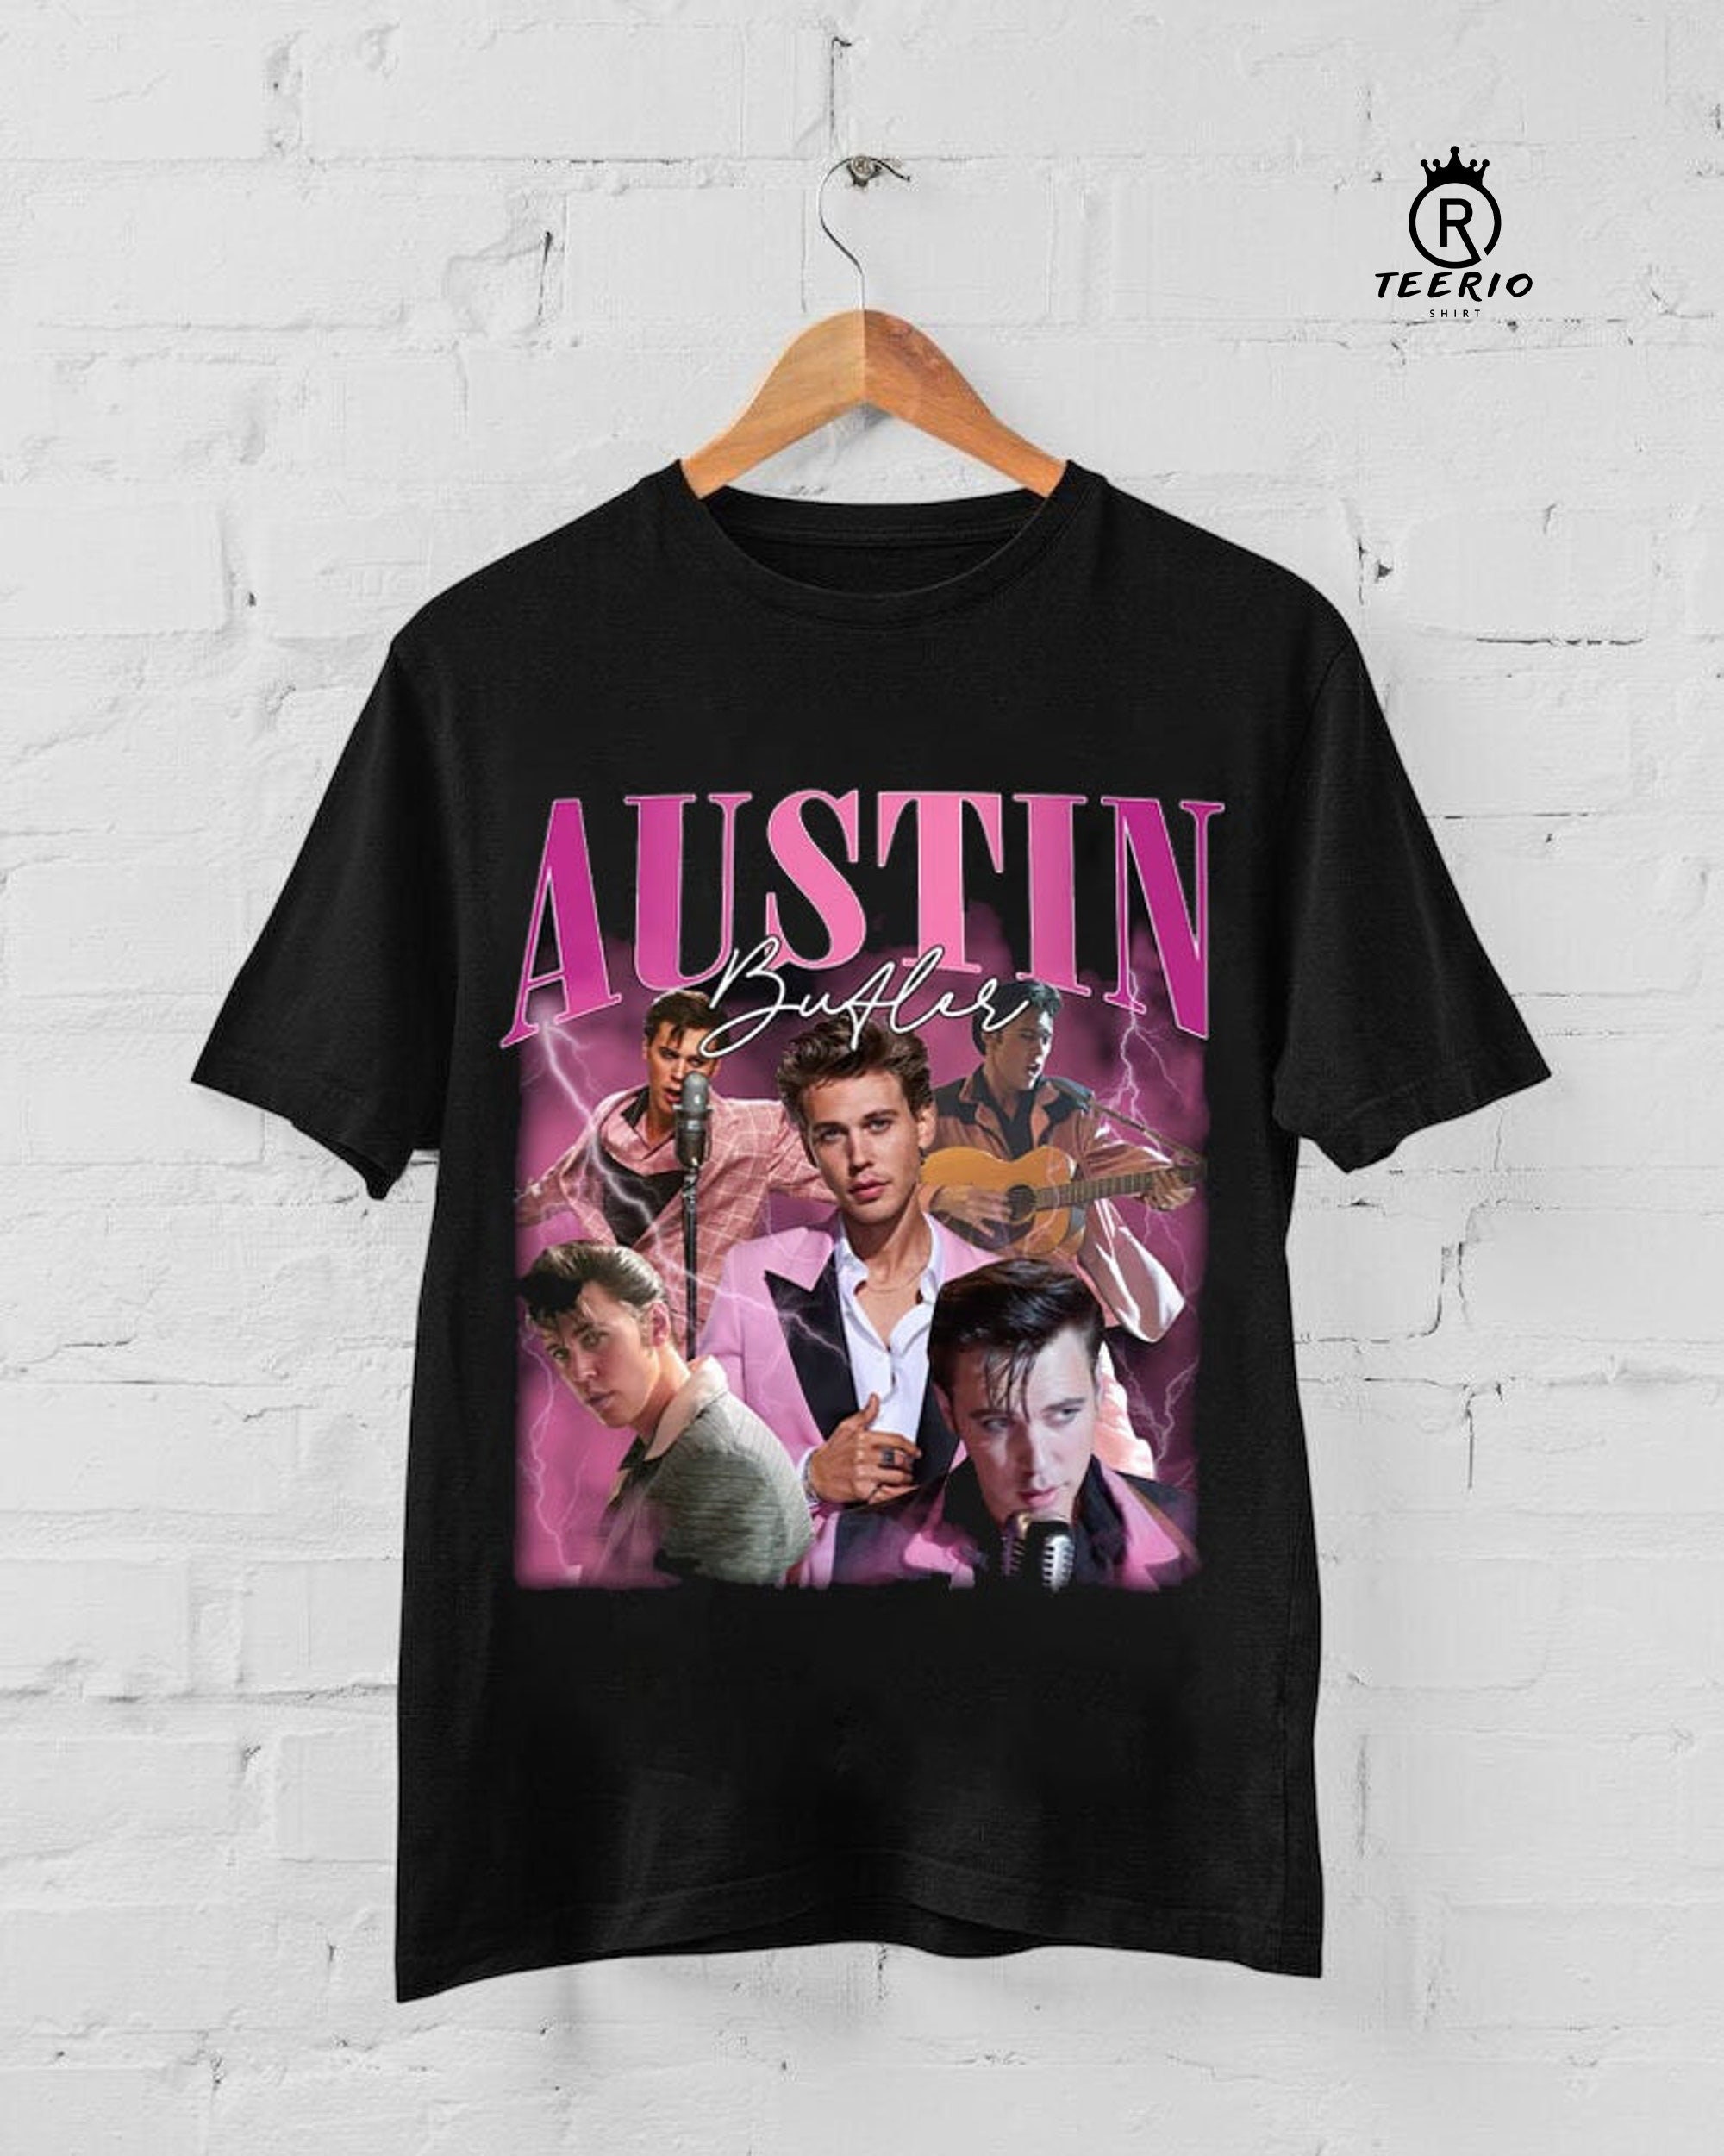 Austin Butler Shirt, Elvis T-Shirt, Vintage 90s Austin Butler Music T-Shirt, Austin Butler Concert 2022 Tee